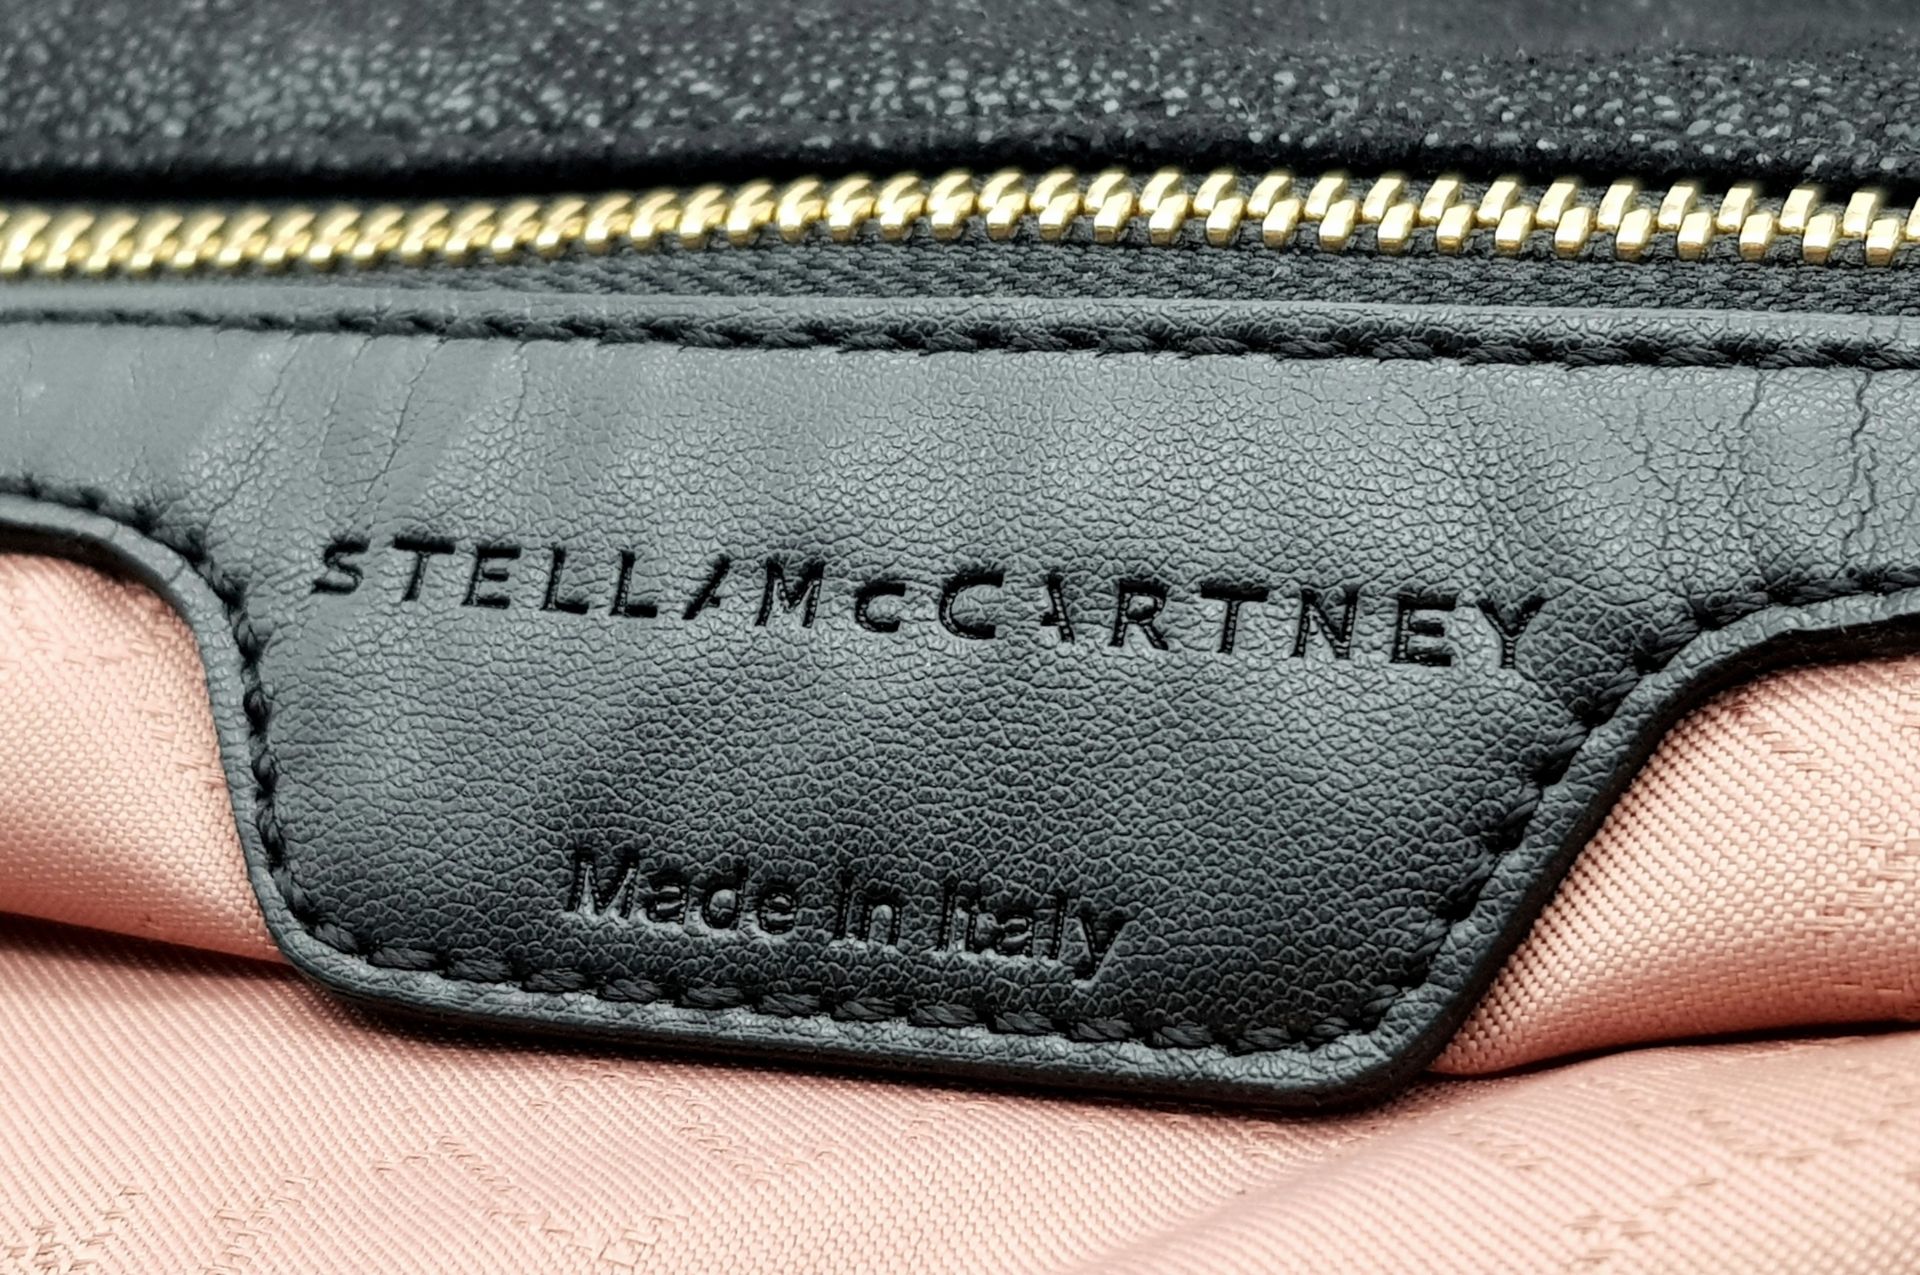 A Stella McCartney Black Falabella Shoulder/Tote Bag. Faux suede exterior with gold-toned heavy - Bild 9 aus 11